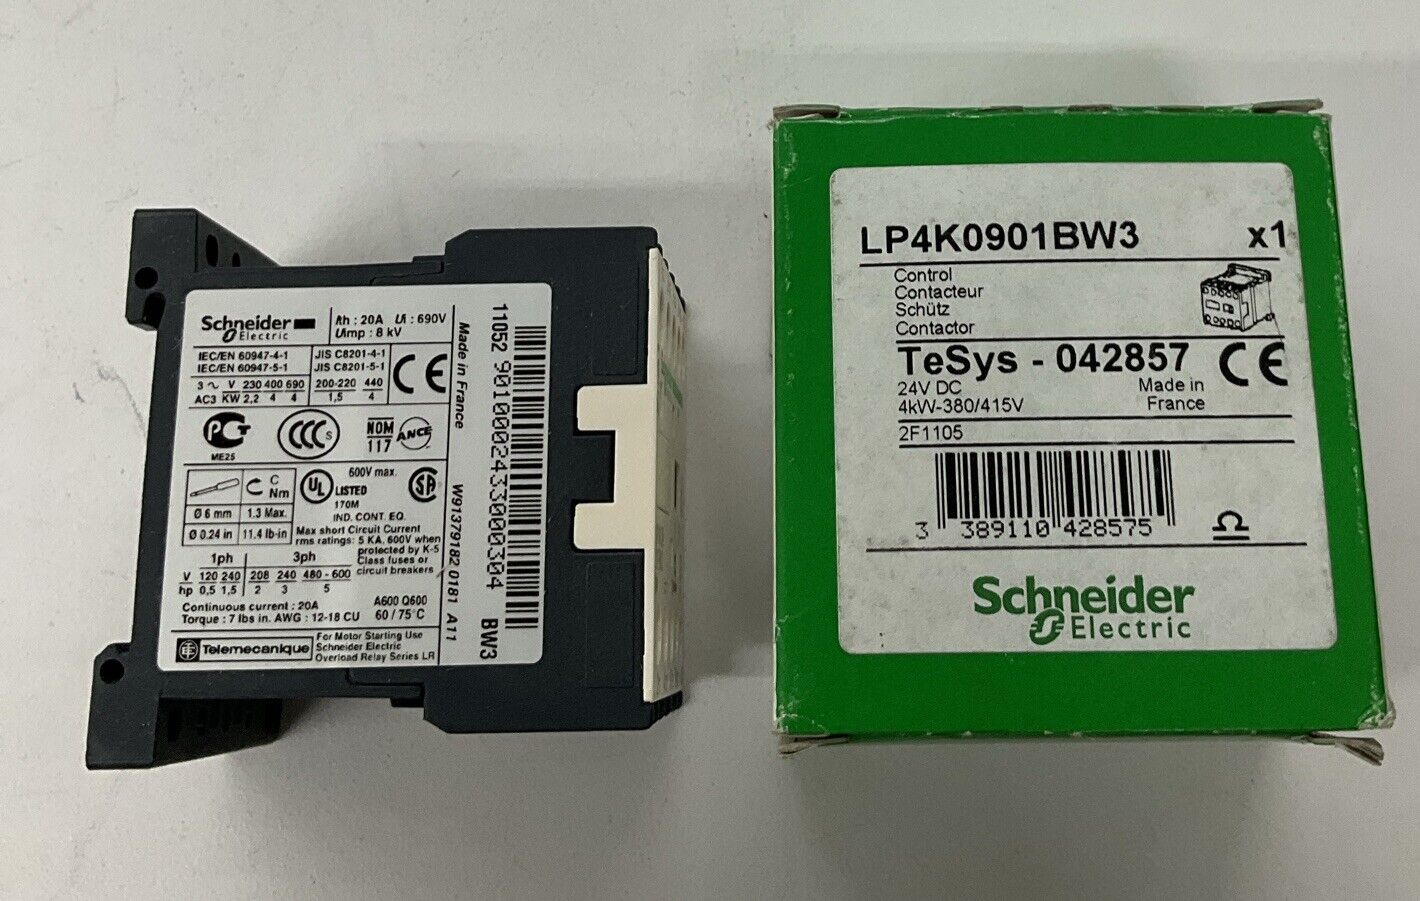 Schneider Electric LP4K0901BW3 24VDC Contactor (CL159) - 0